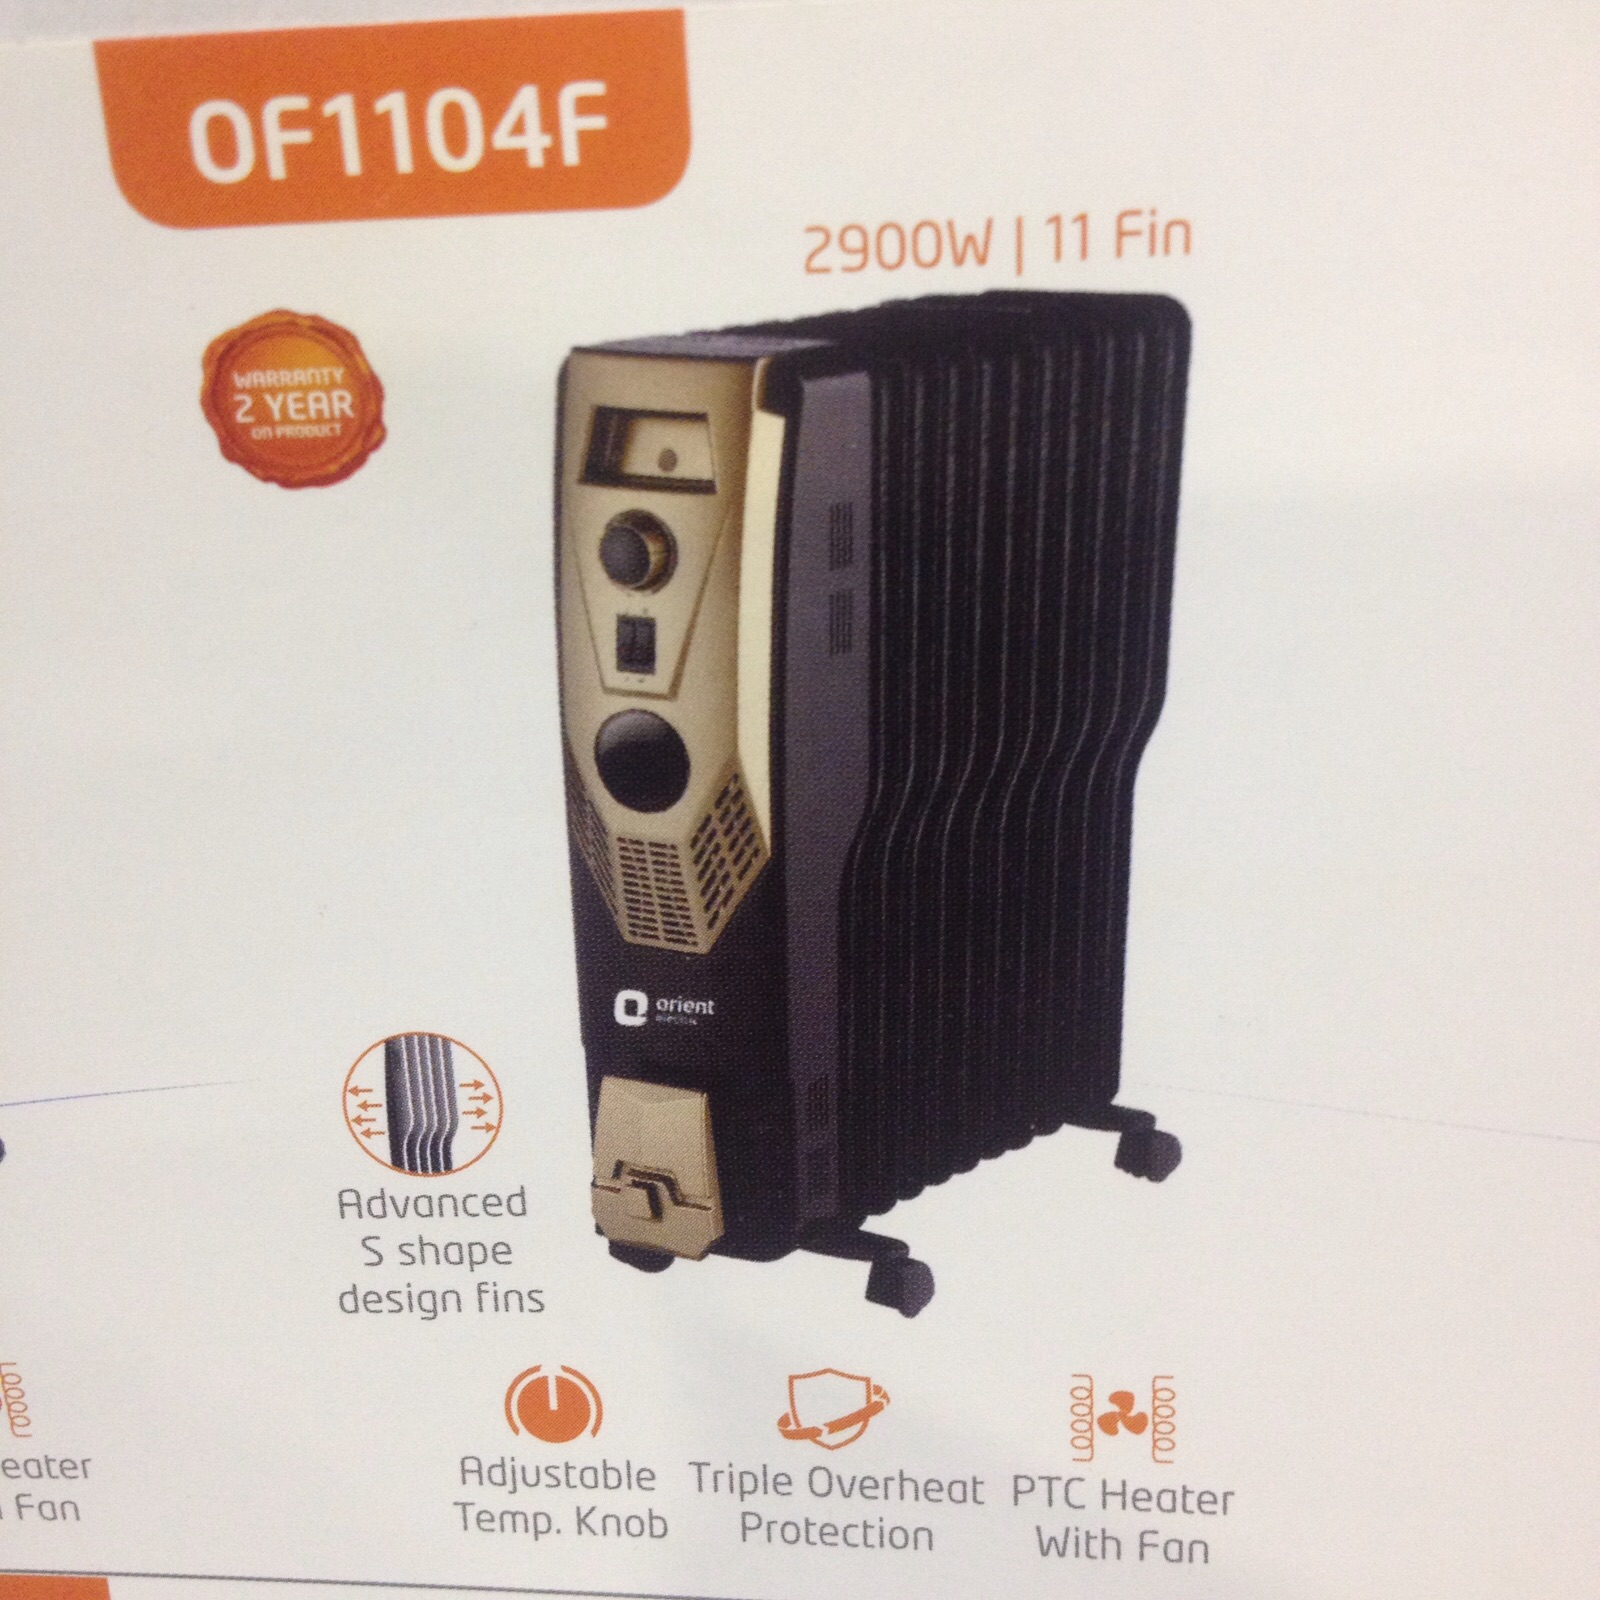 Buy orient oil heater 11 fin with fan OF1104F Golden series Online ...